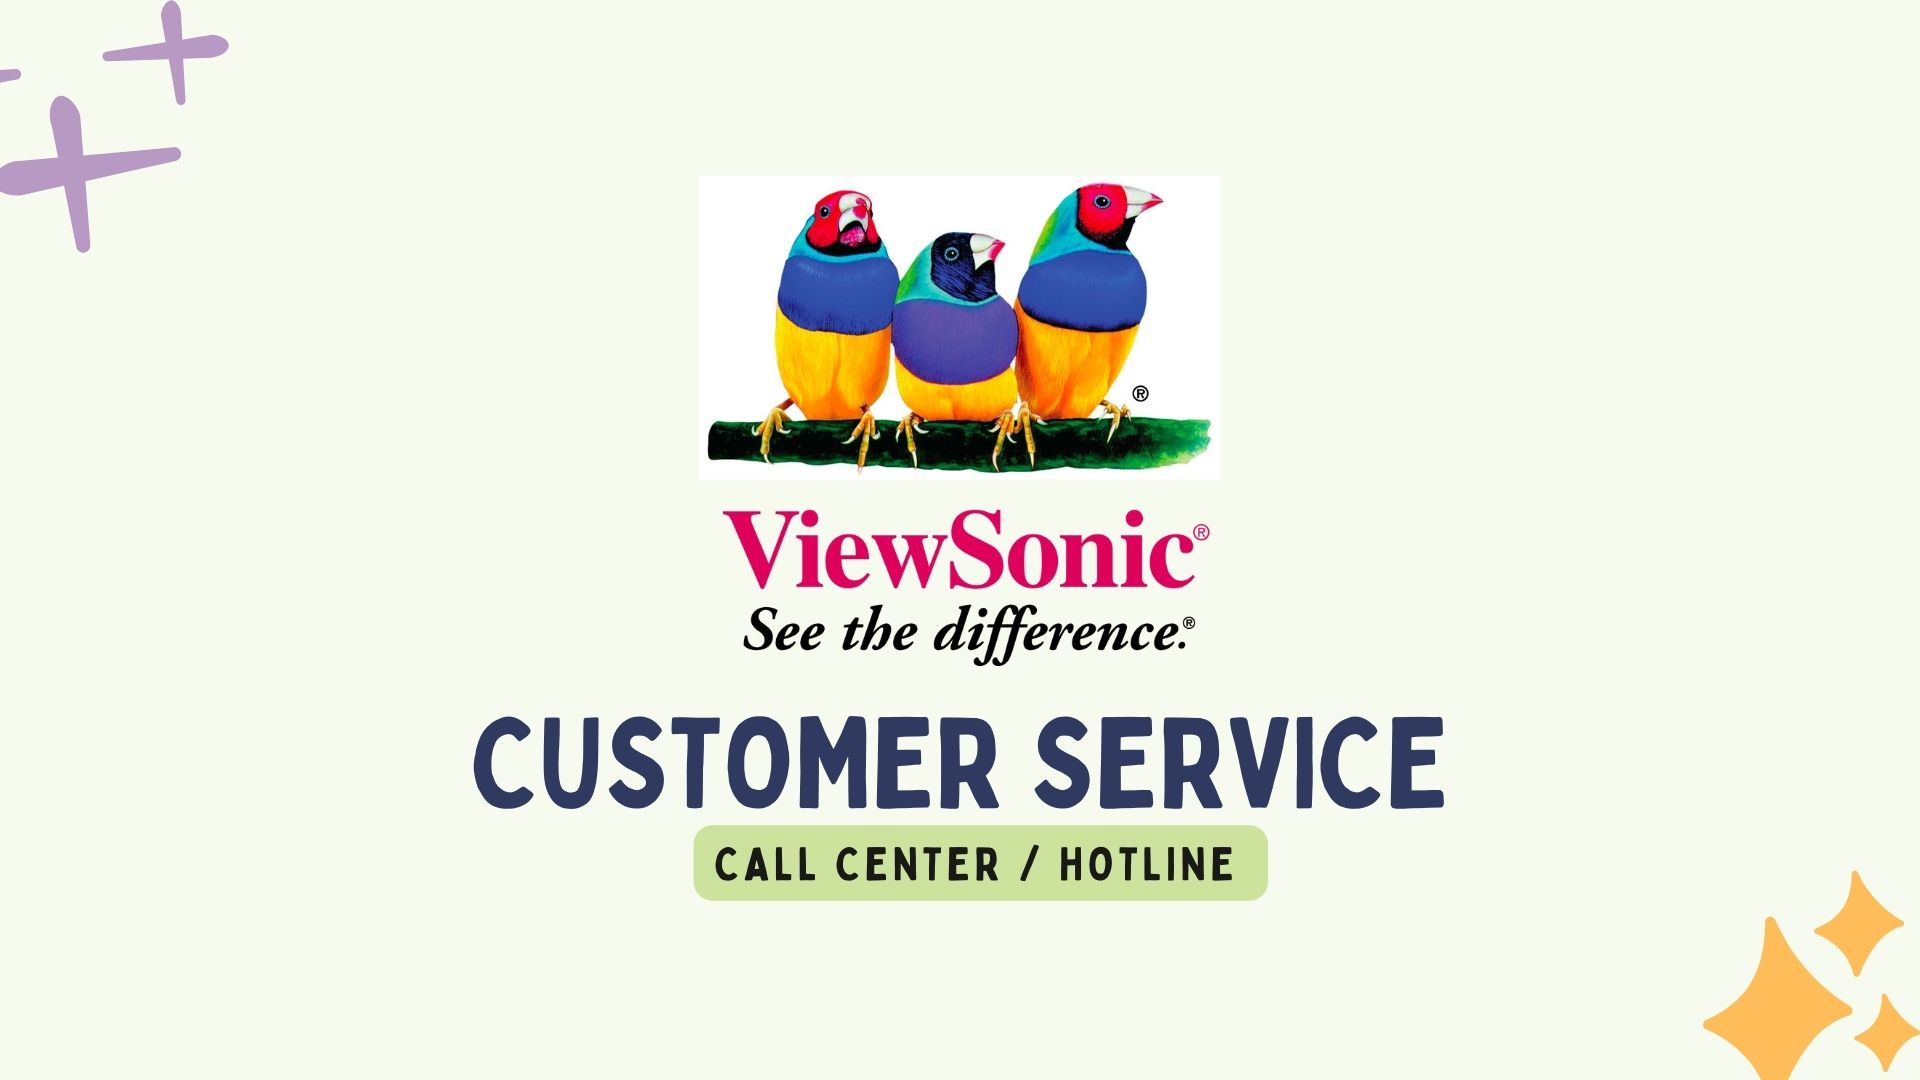 Viewsonic Customer Service